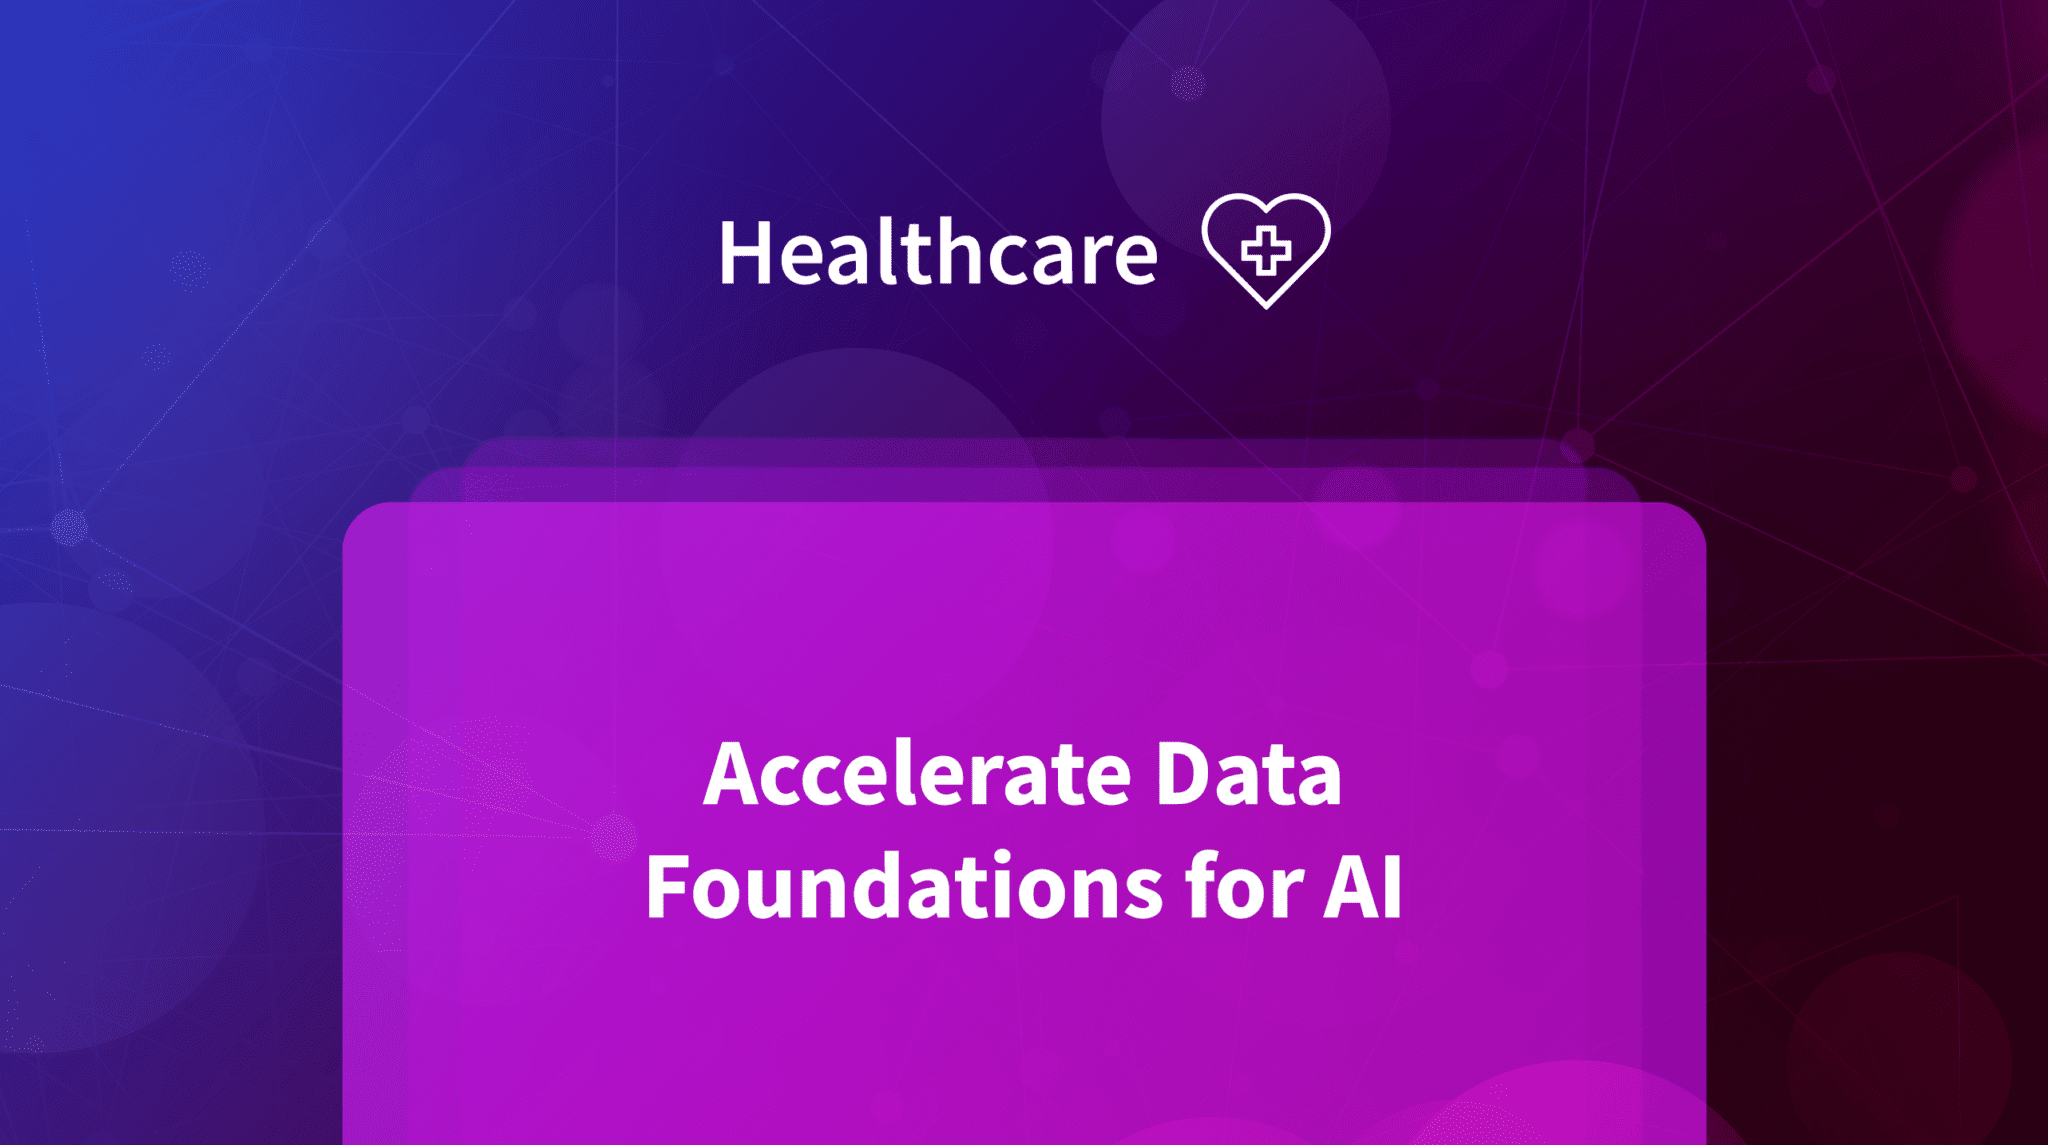 Health care - Accelerate Data Foundations for AI